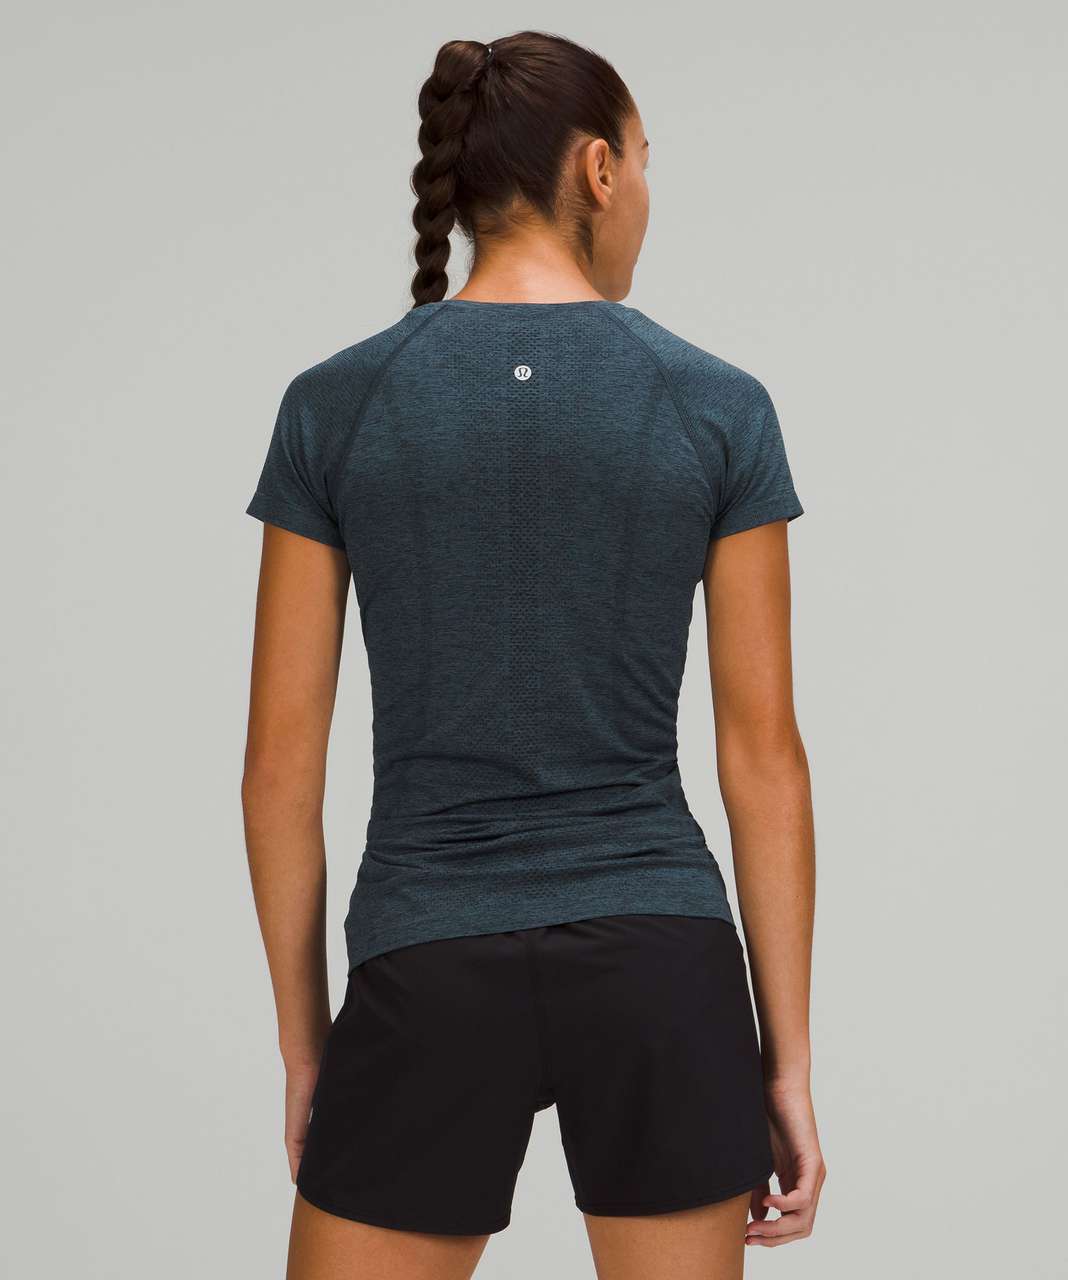 Lululemon Swiftly Tech Short Sleeve Shirt 2.0 - True Navy / Iron Blue